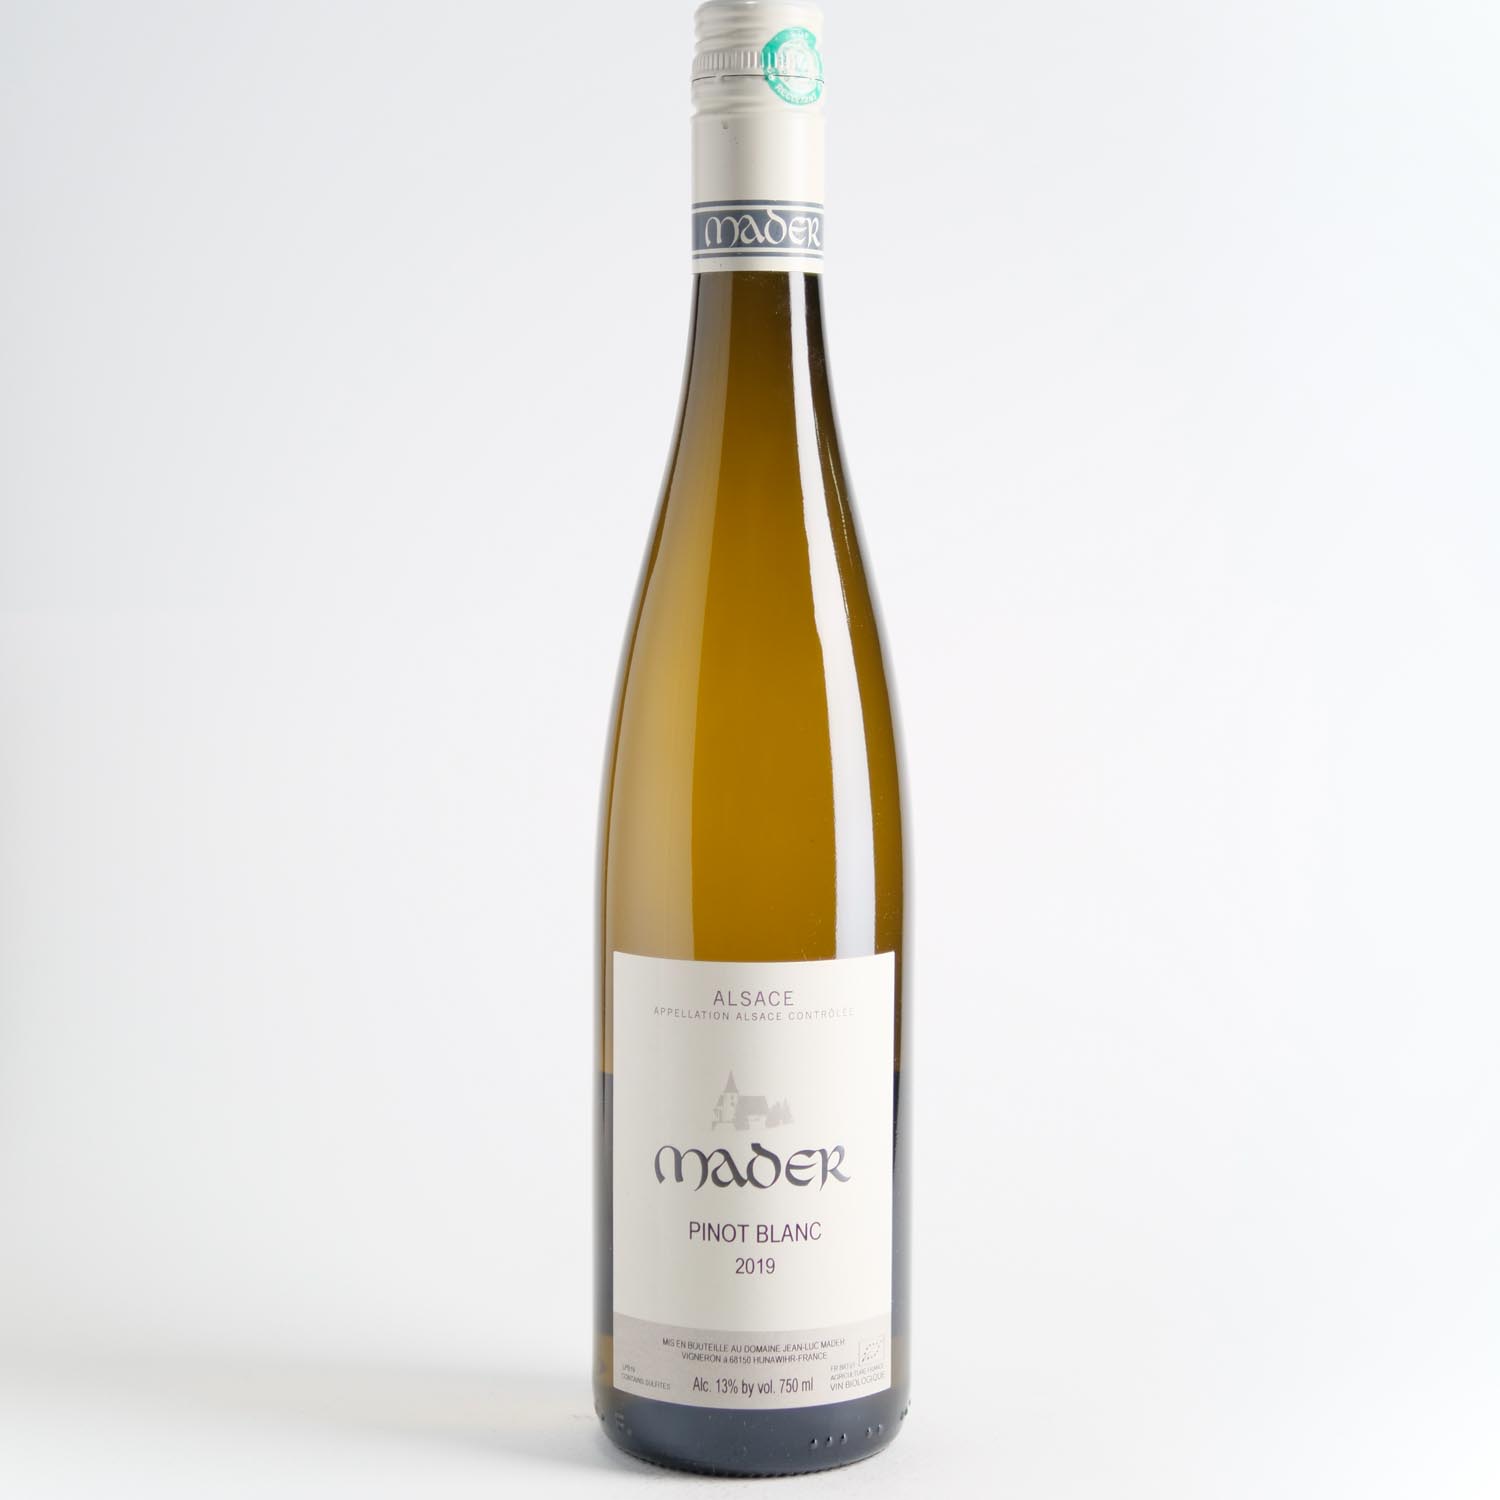 Mader Pinot Blanc 2019